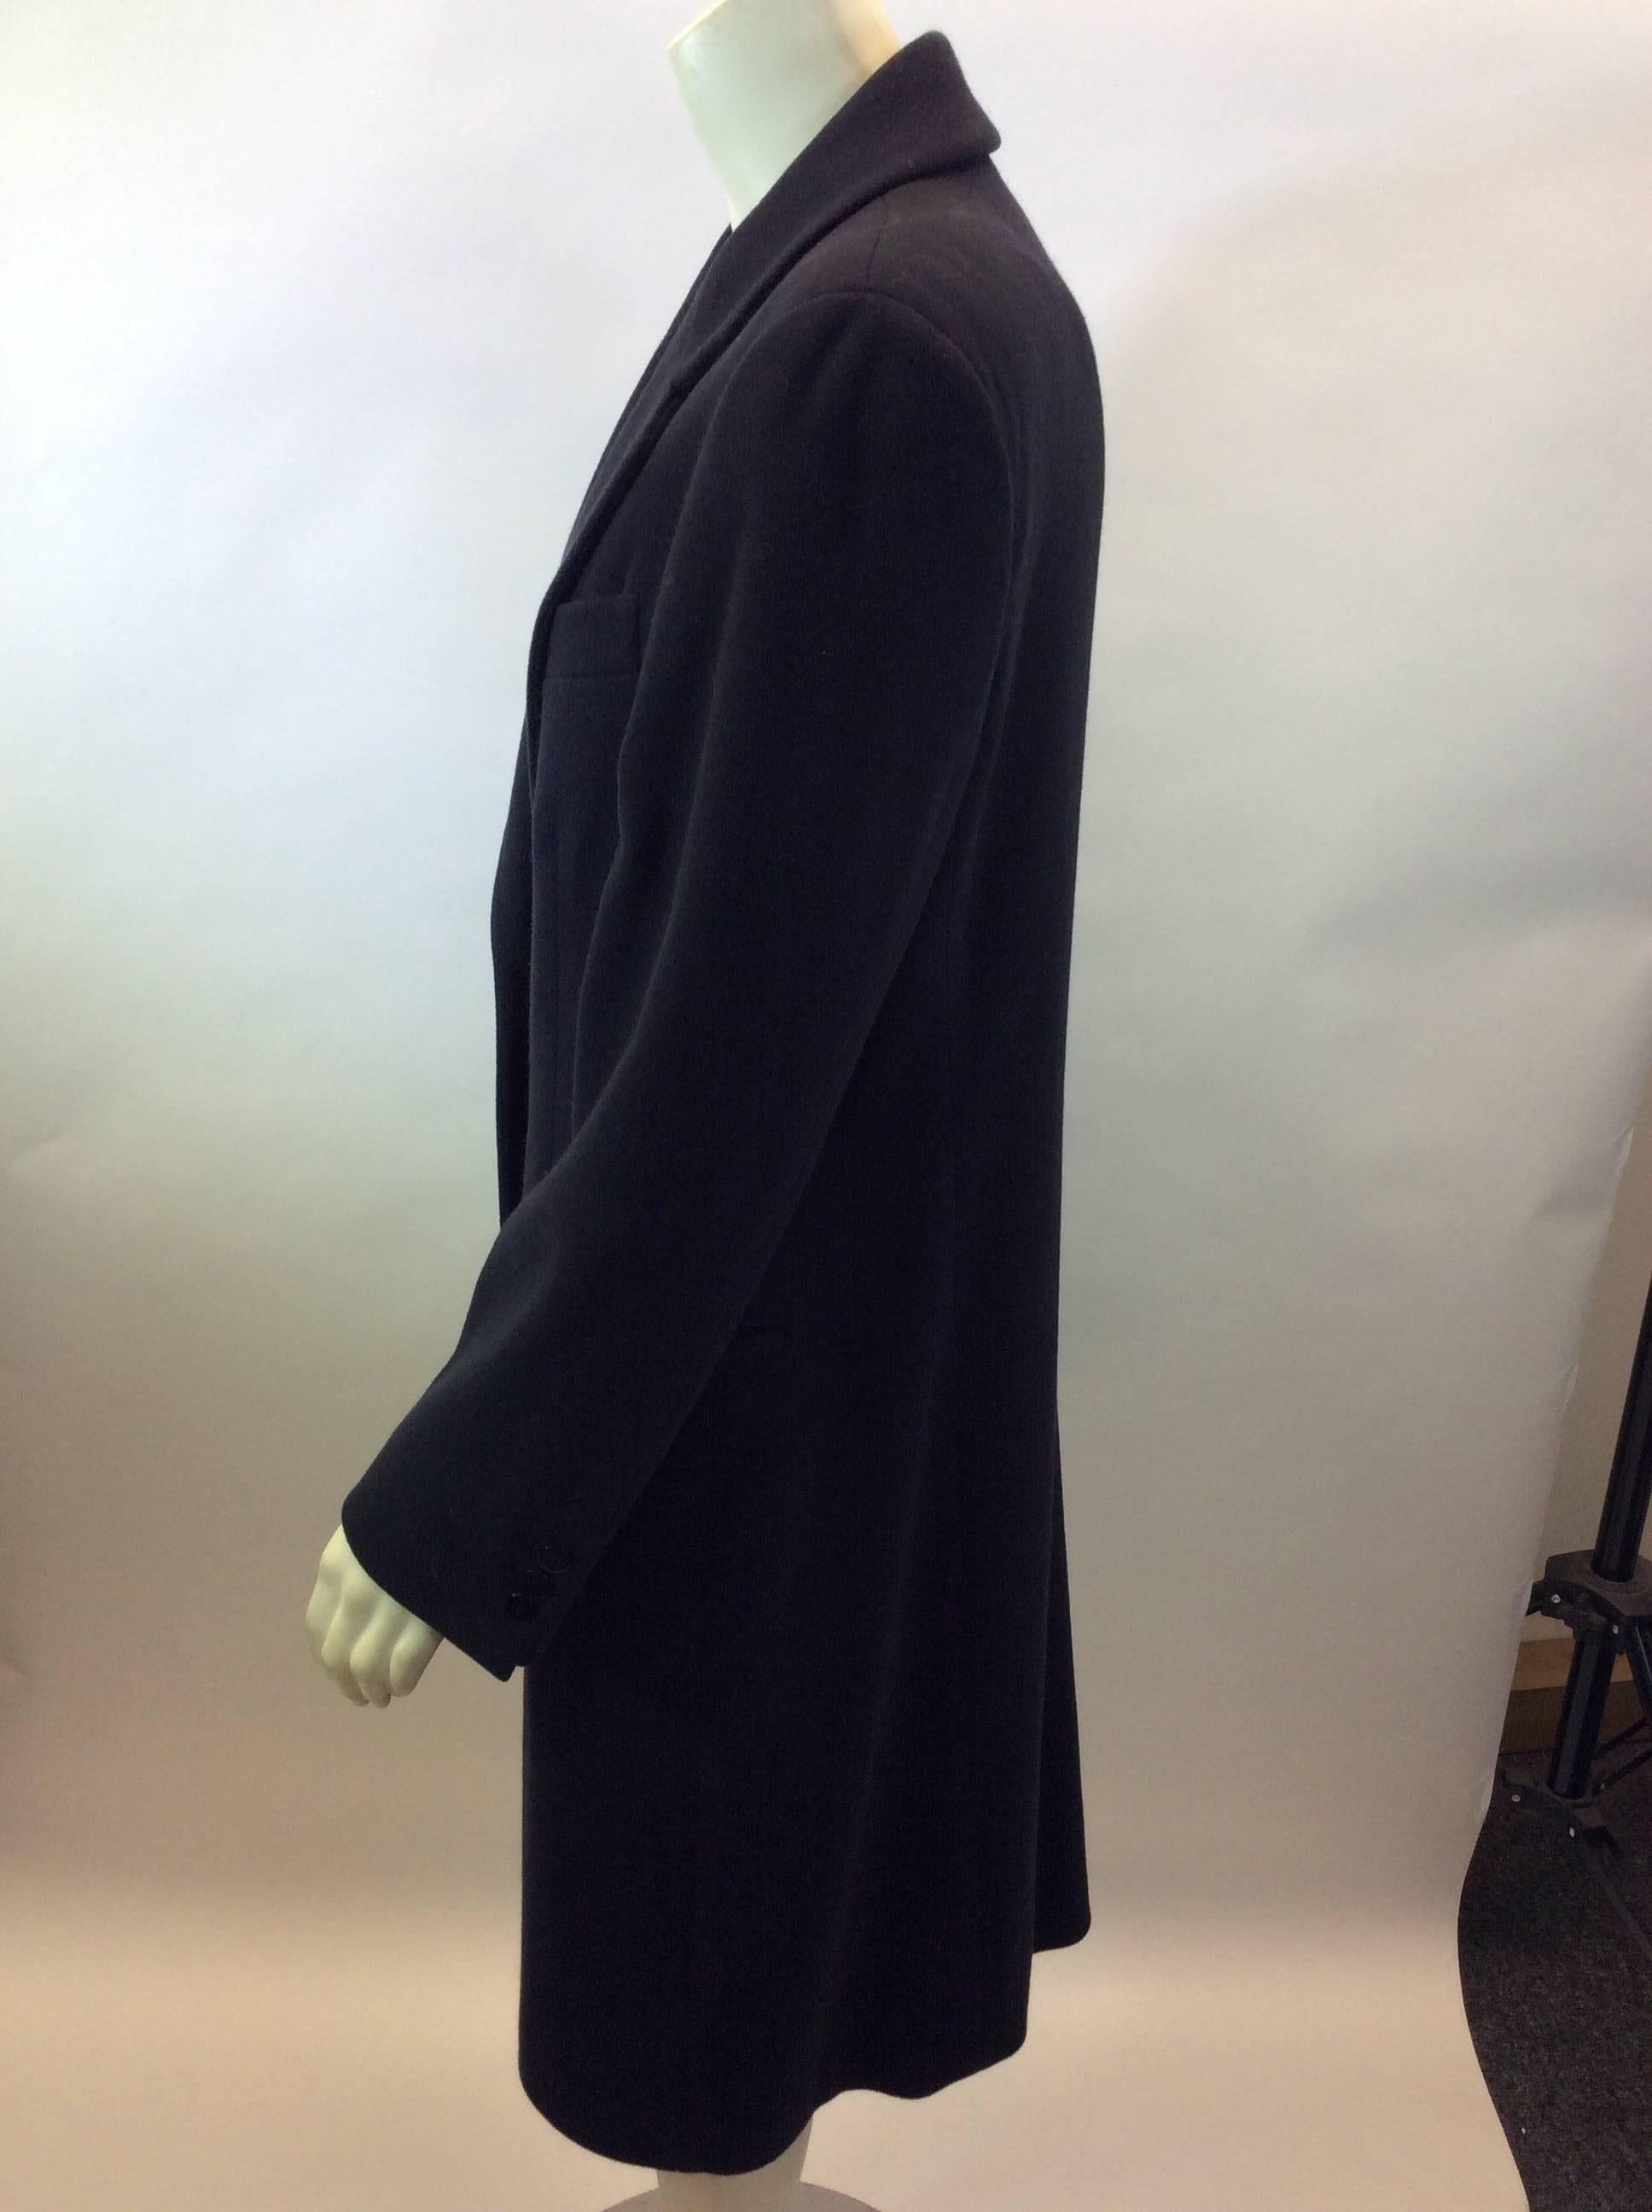 Donna Karan Black Wool Coat
$299
100% Wool
Made in Italy
Length 39